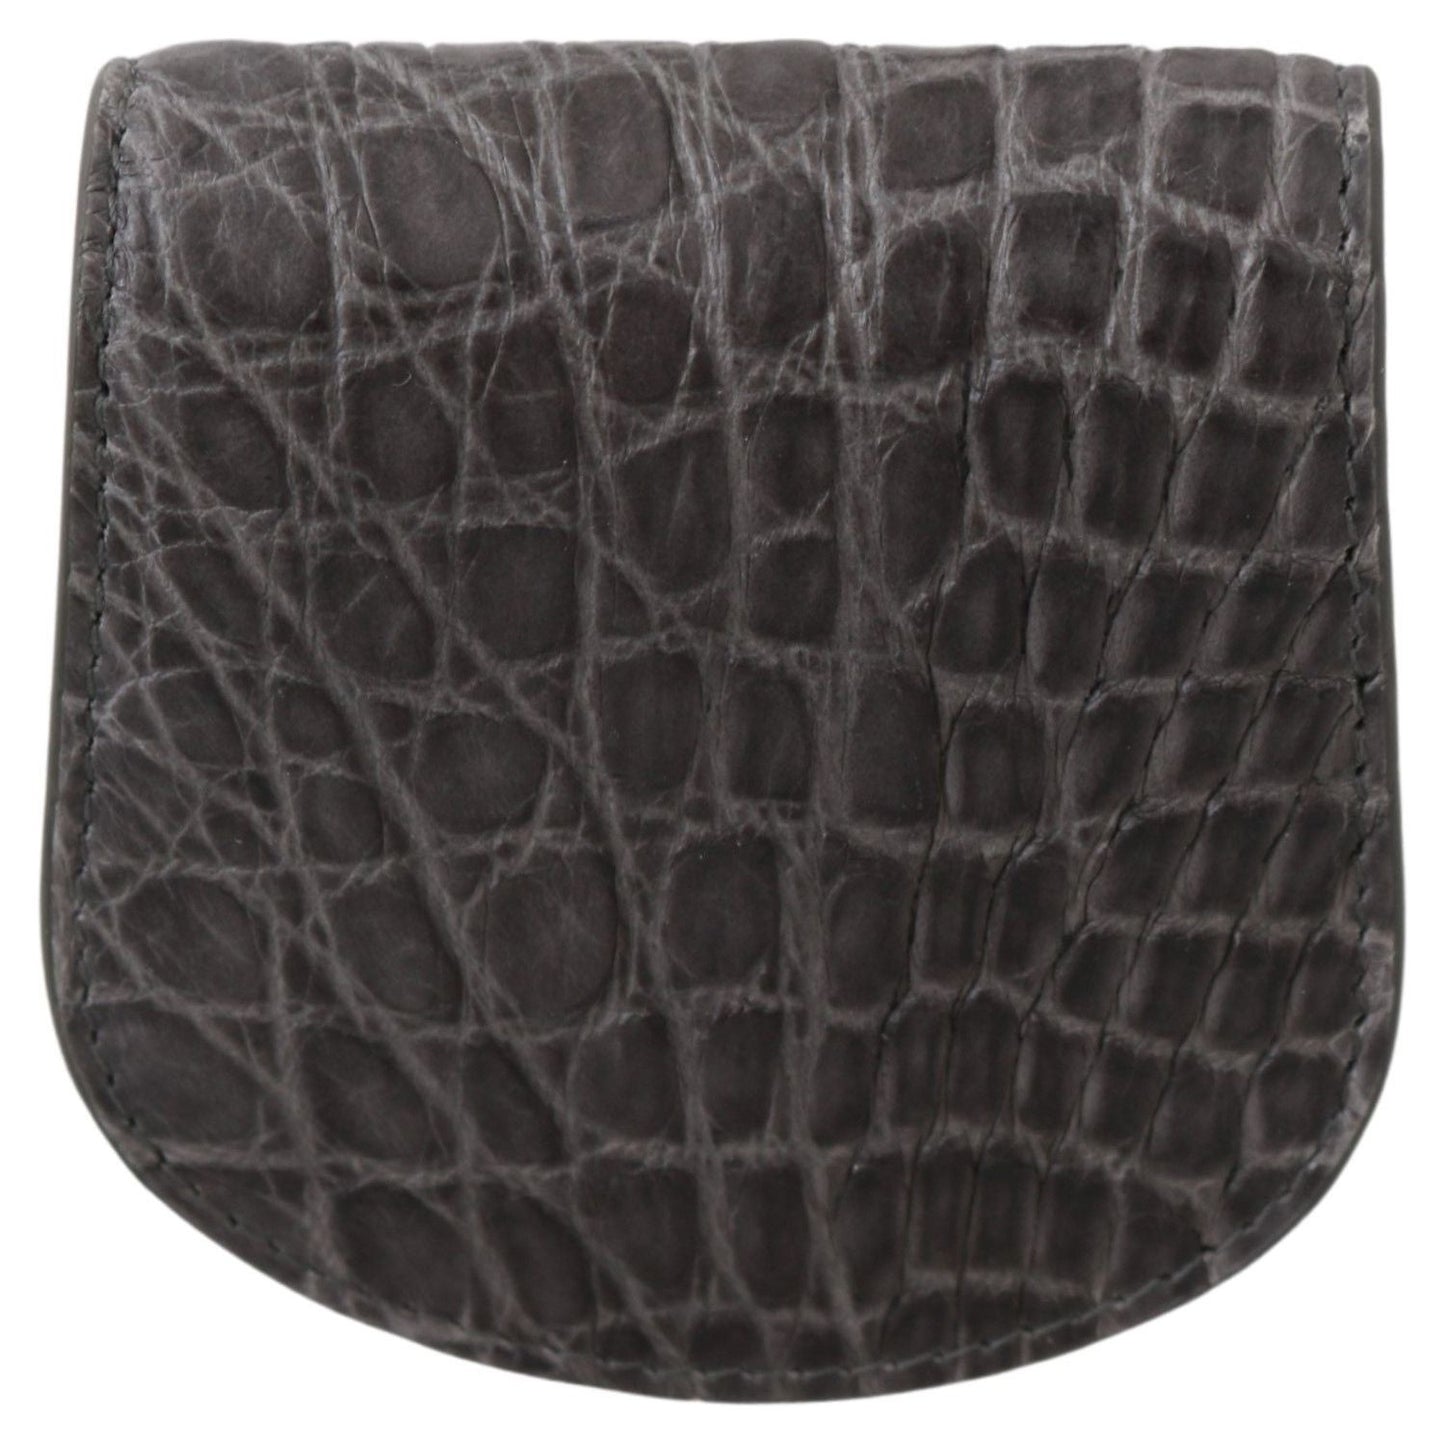 Dolce & Gabbana Exotic Gray Leather Condom Case Wallet gray-exotic-skin-condom-case-holder-pocket-wallet Condom Case IMG_0240-2867f845-986.jpg